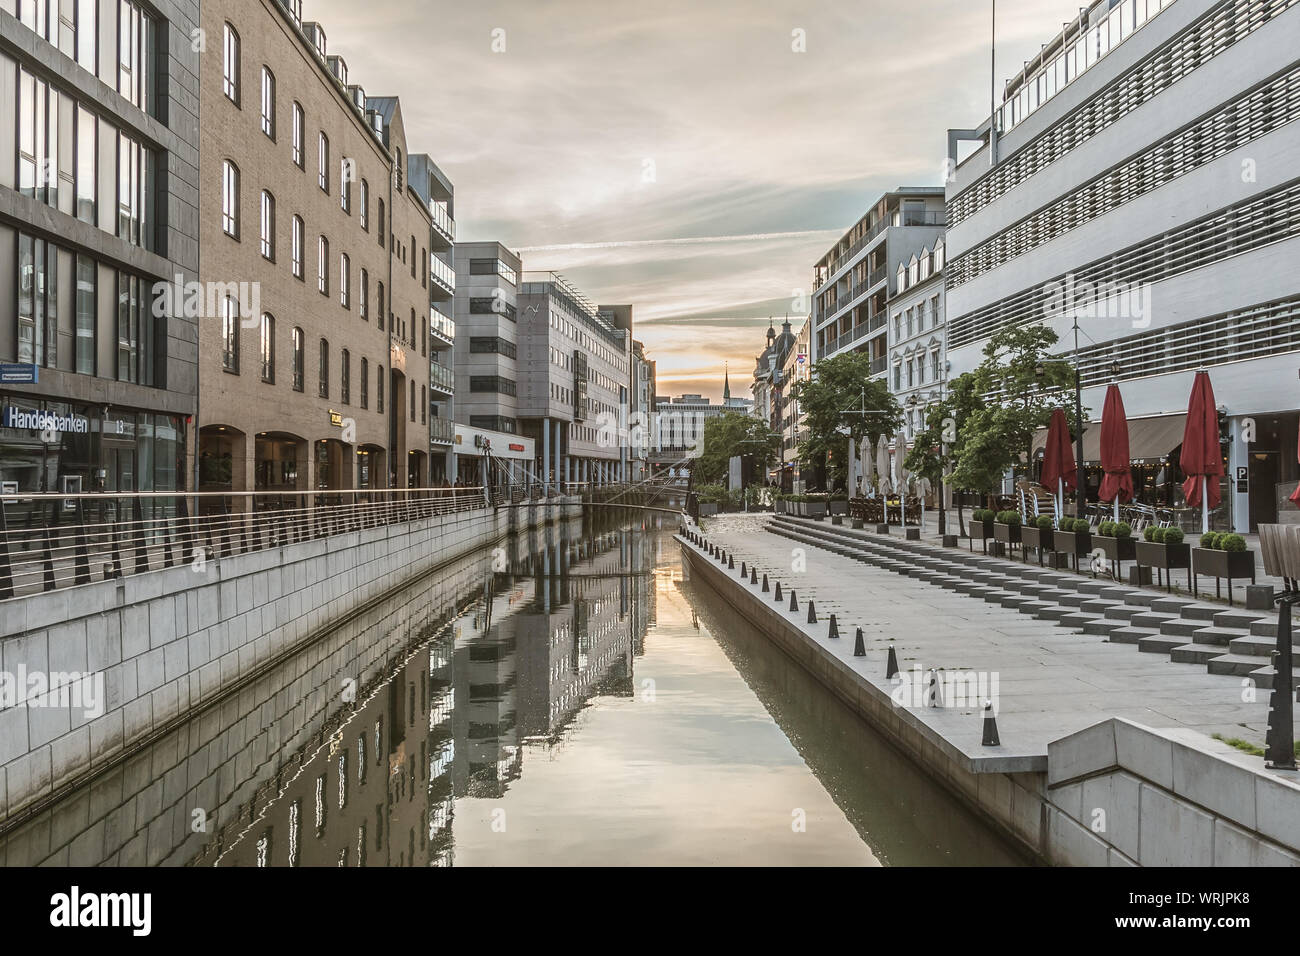 Åboulevarden in  the heart of Aarhus, grey houses reflecting in the water, Denmark, July 15, 2019 Stock Photo